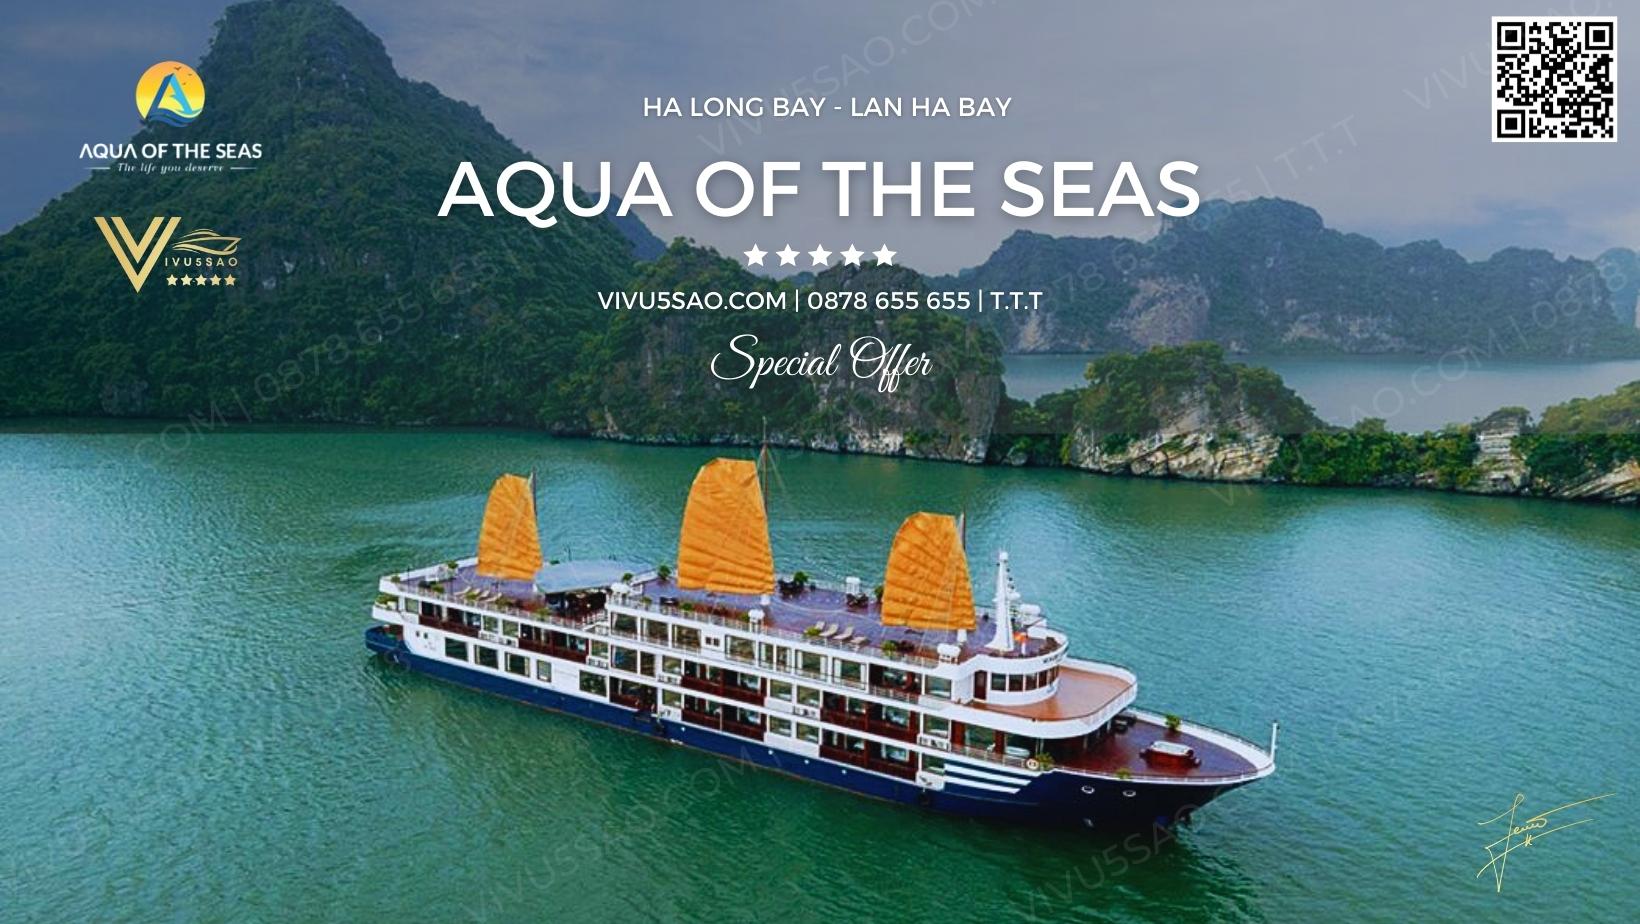 Aqua-of-the-seas-cruise-du-thuyen-nghi-dem-5-sao